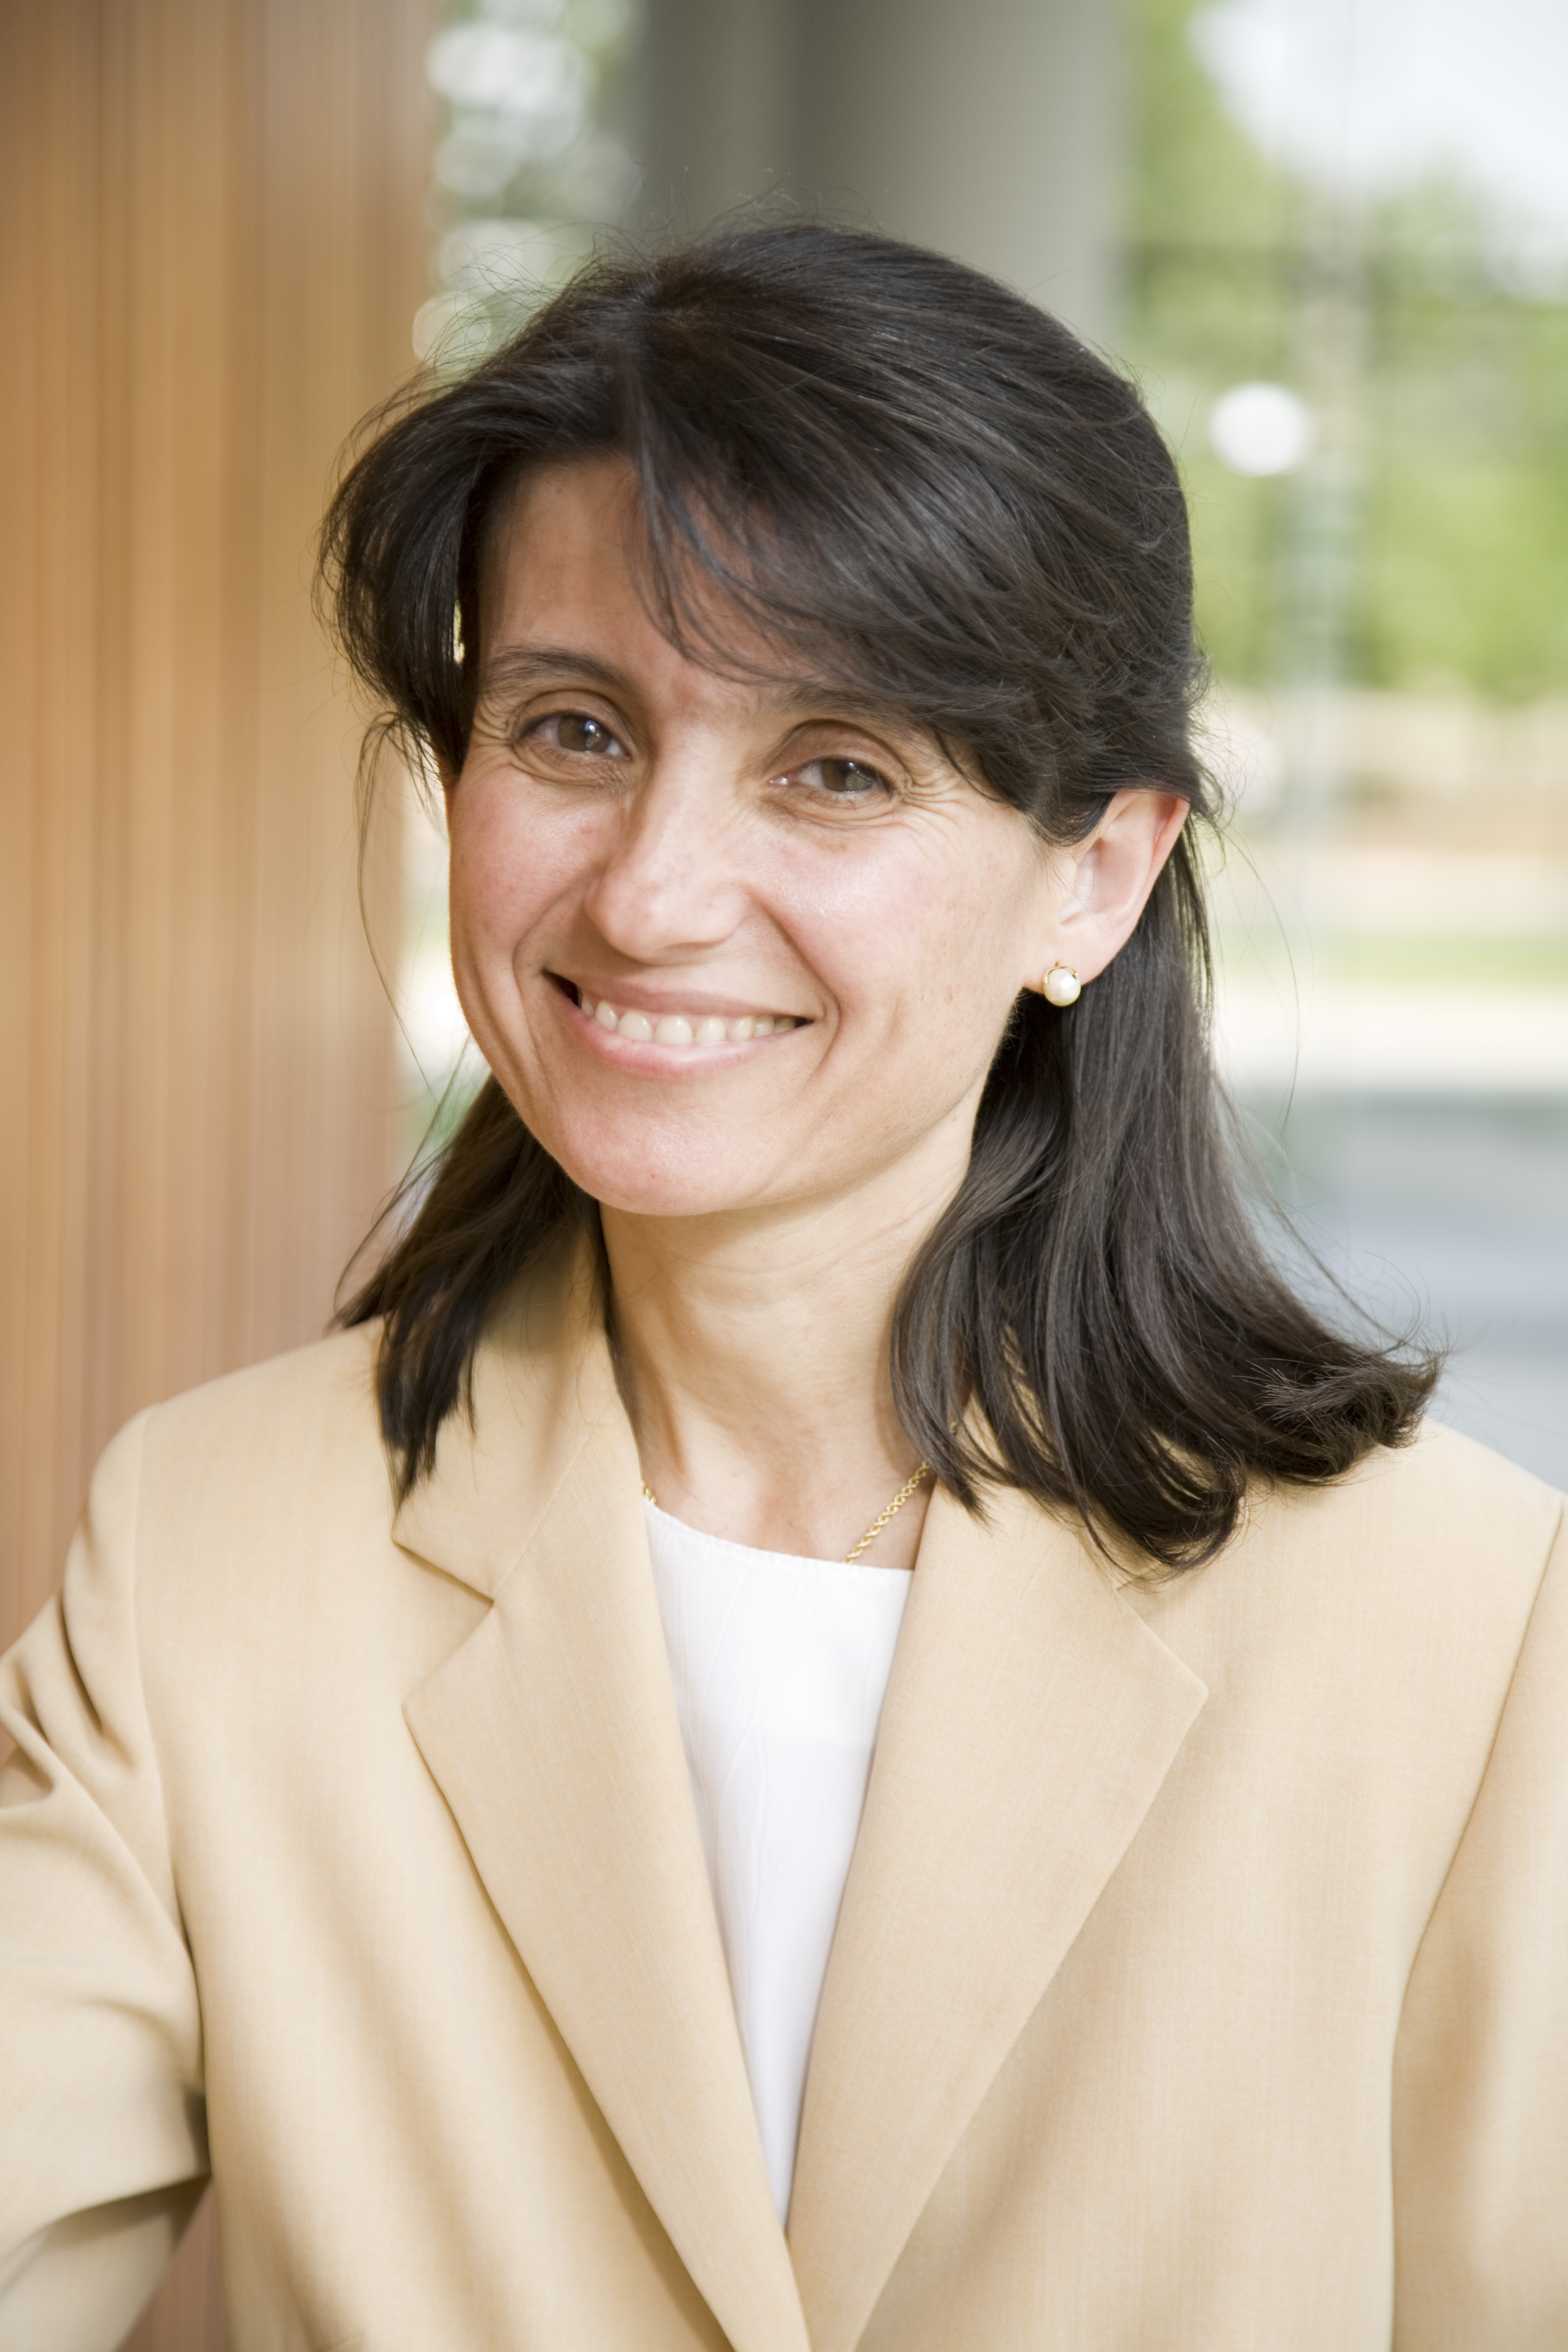 Ana Maria Cuervo in 2008